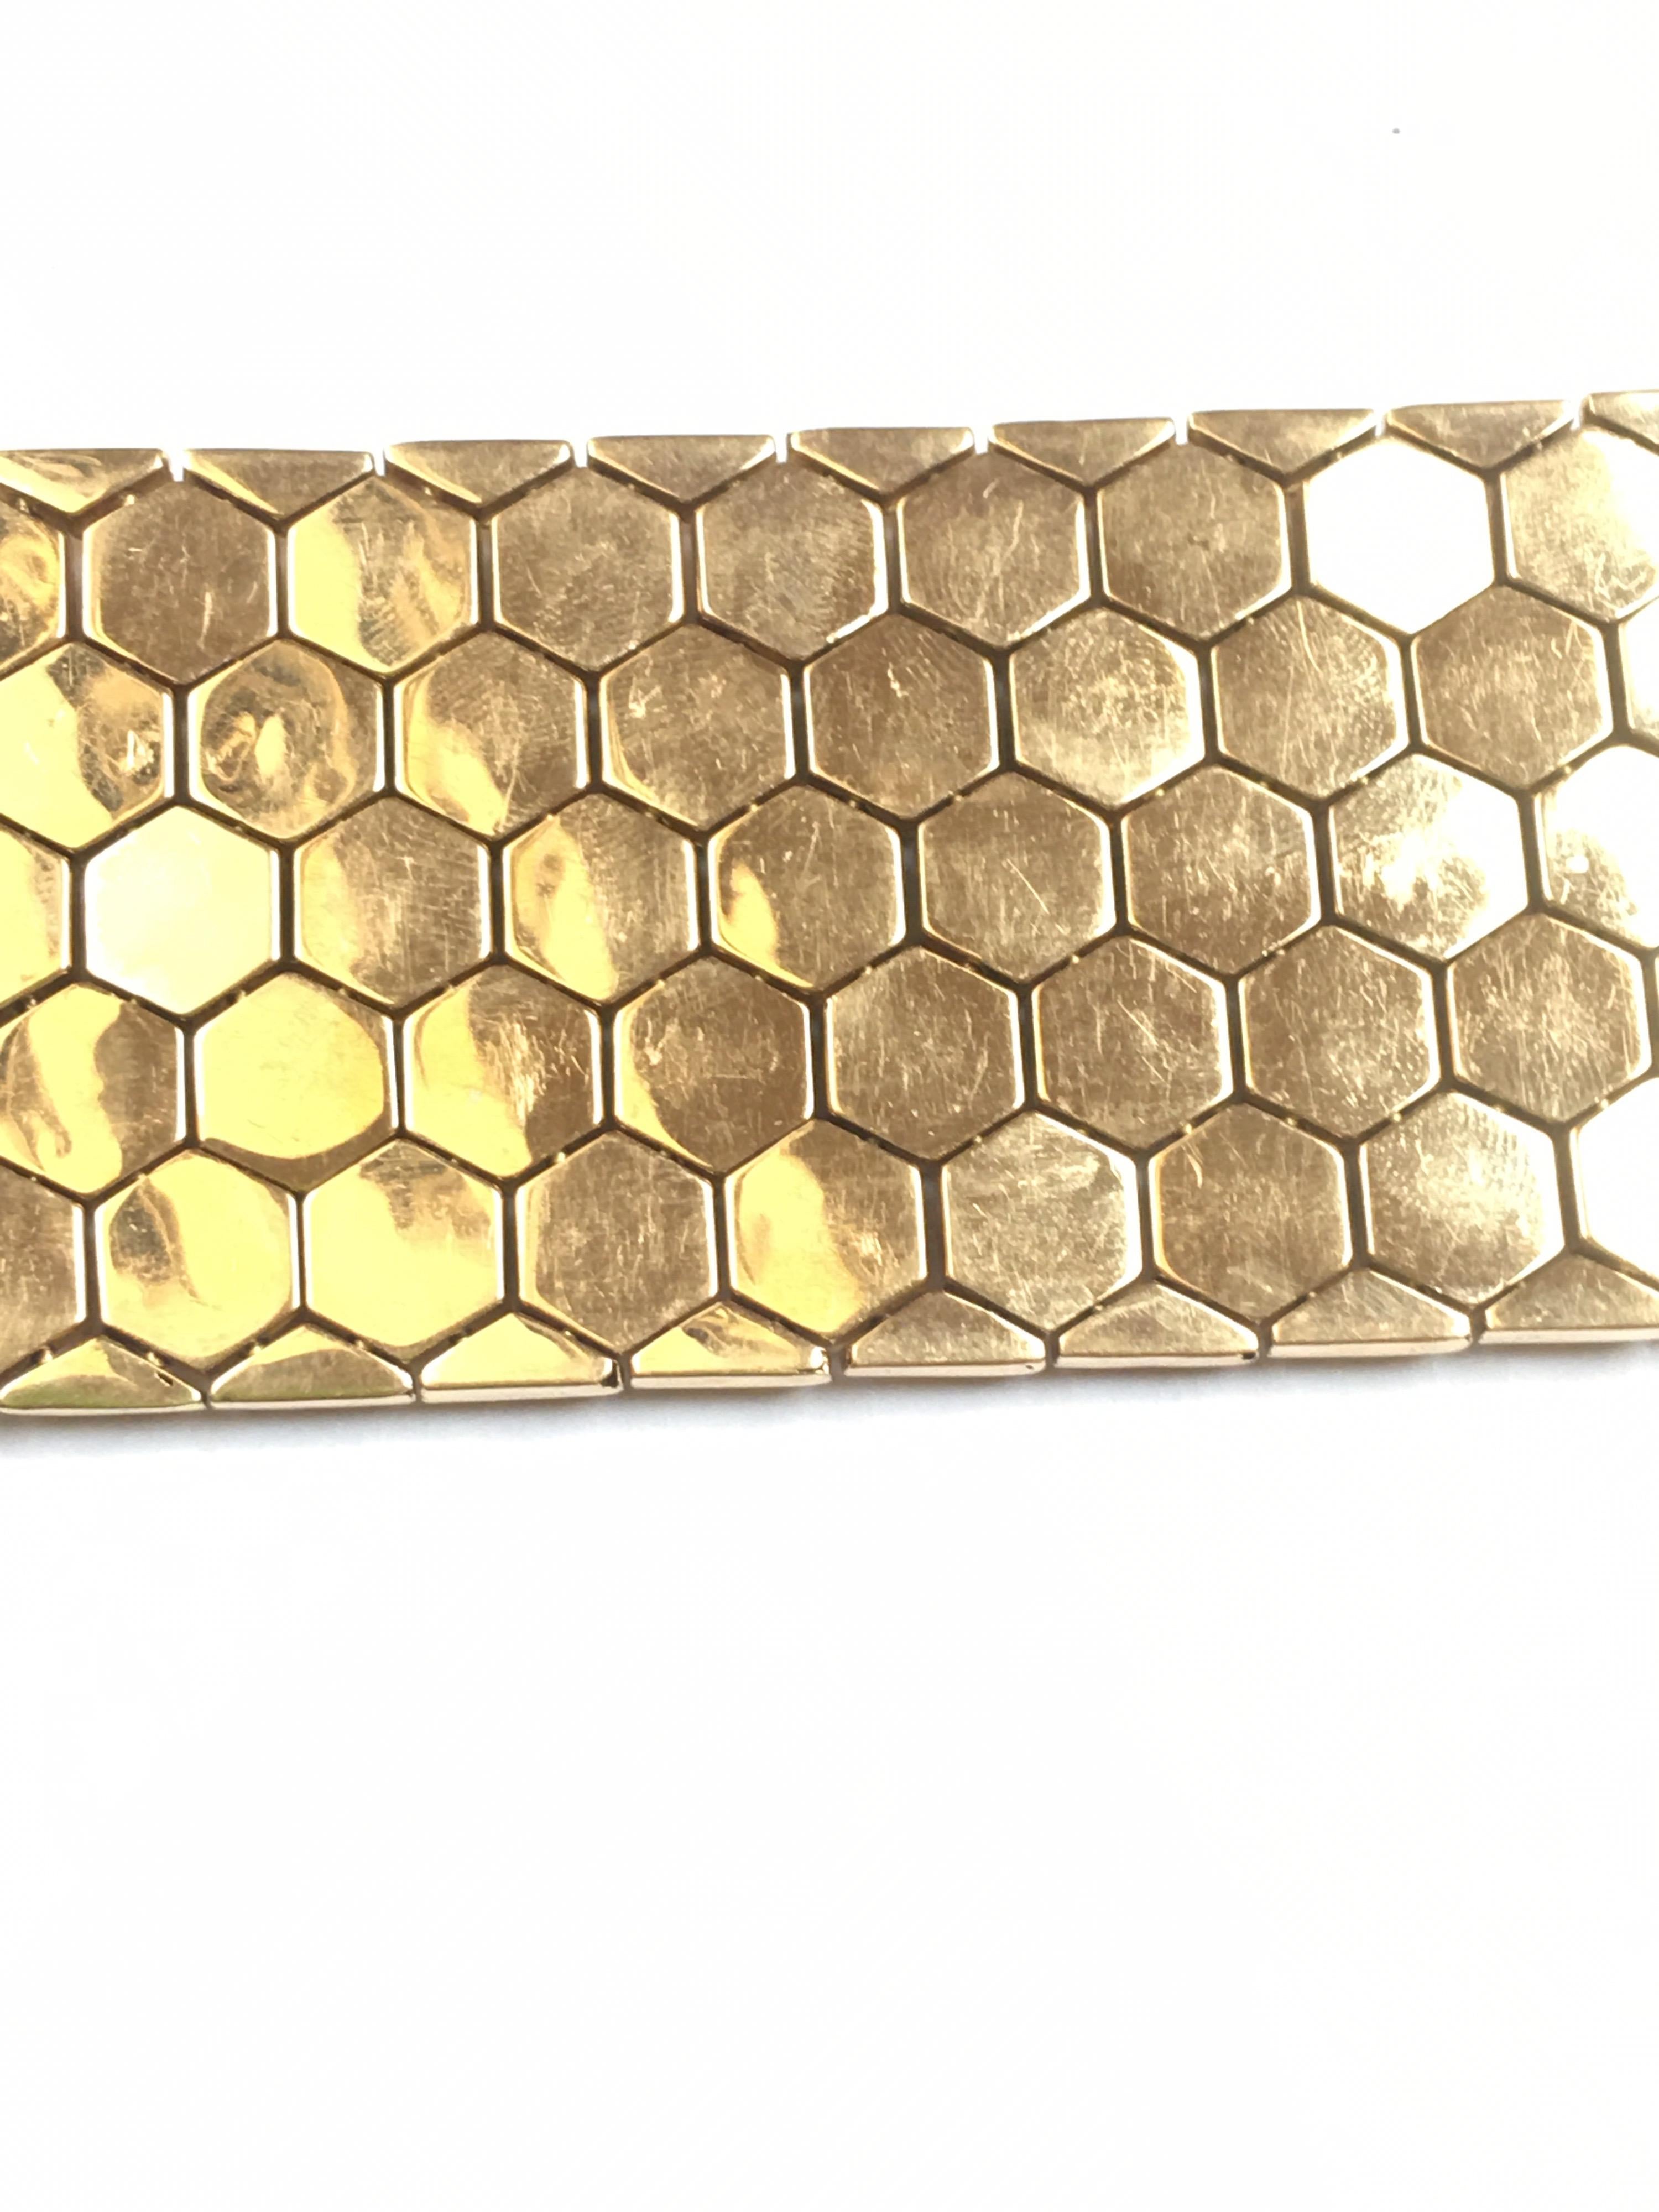 15 Carat Diamond Fancy Link Bracelet in 18 Karat Yellow Gold Hexagonal Links In Excellent Condition For Sale In London, GB